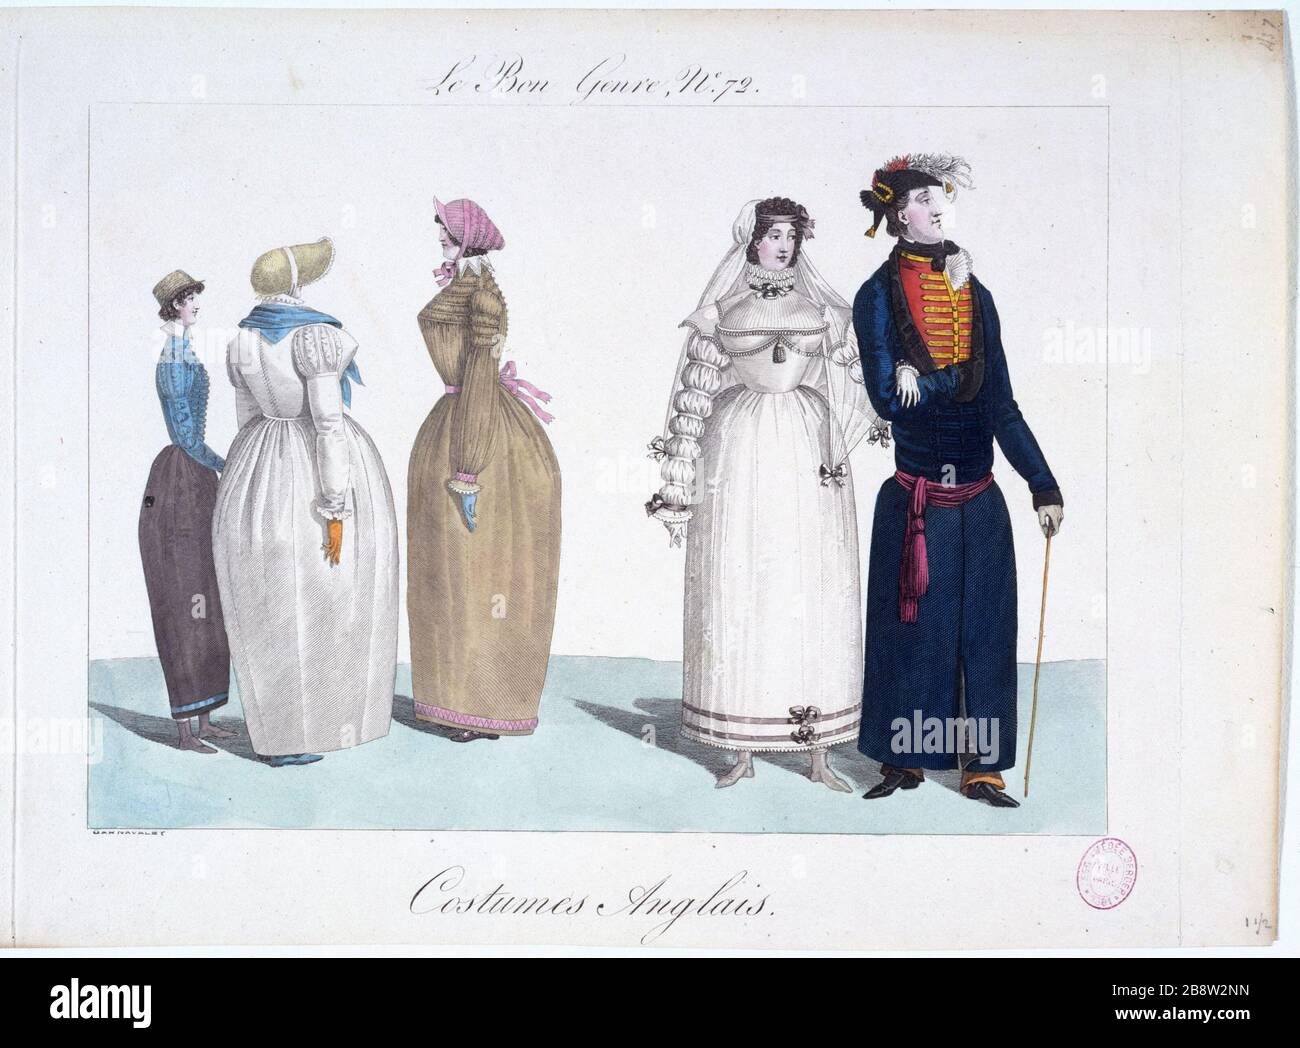 GUTES GESCHLECHT AUSGABE 72 - KOSTÜME ENGLISCH "Le Bon Genre numéro 72, 1814 - Kostüme anglais". Tiefdruck. Paris, musée Carnavalet. Stockfoto